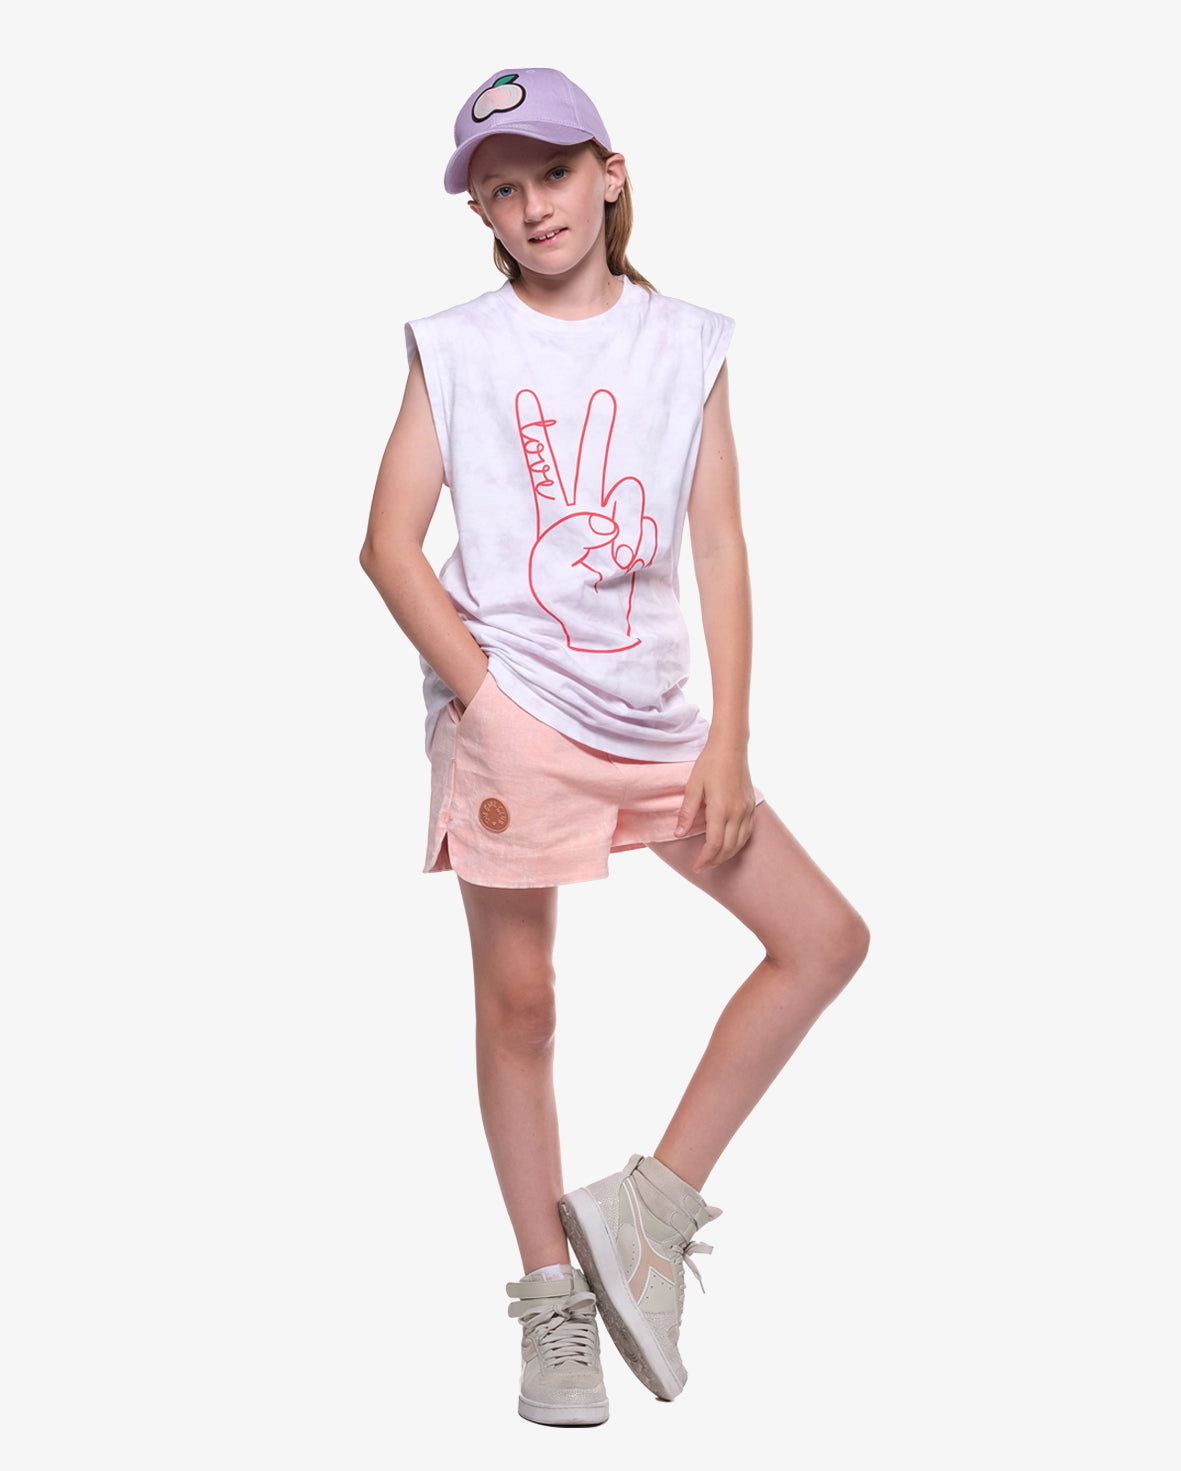 The Girl Club - Sherbet Pink Simple Denim Shorts - Sherbet Pink Denim Wash Girls The Girl Club